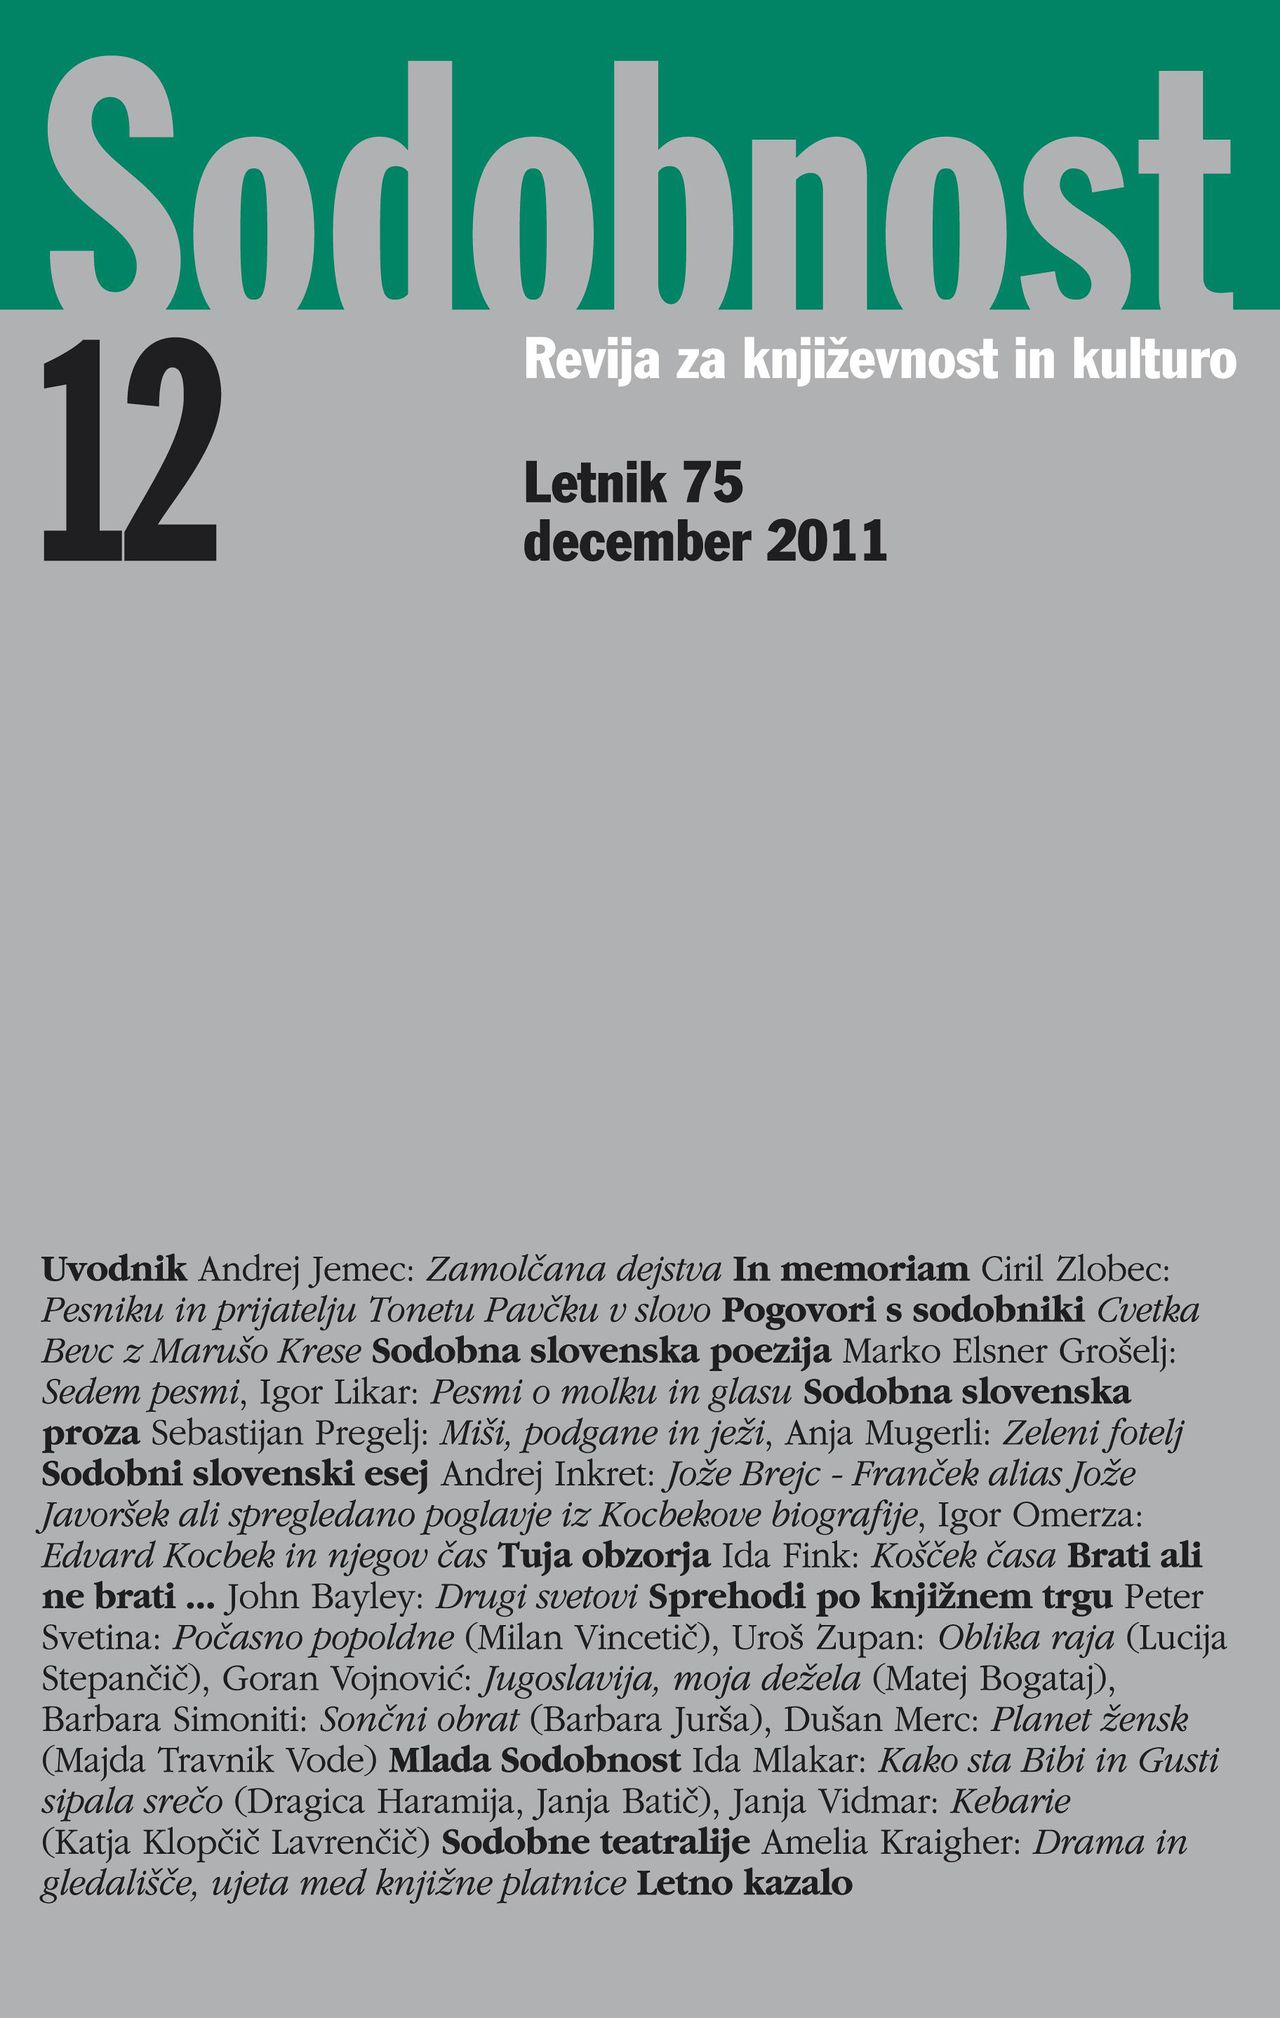 Sodobnost Magazine 2011 December.jpg